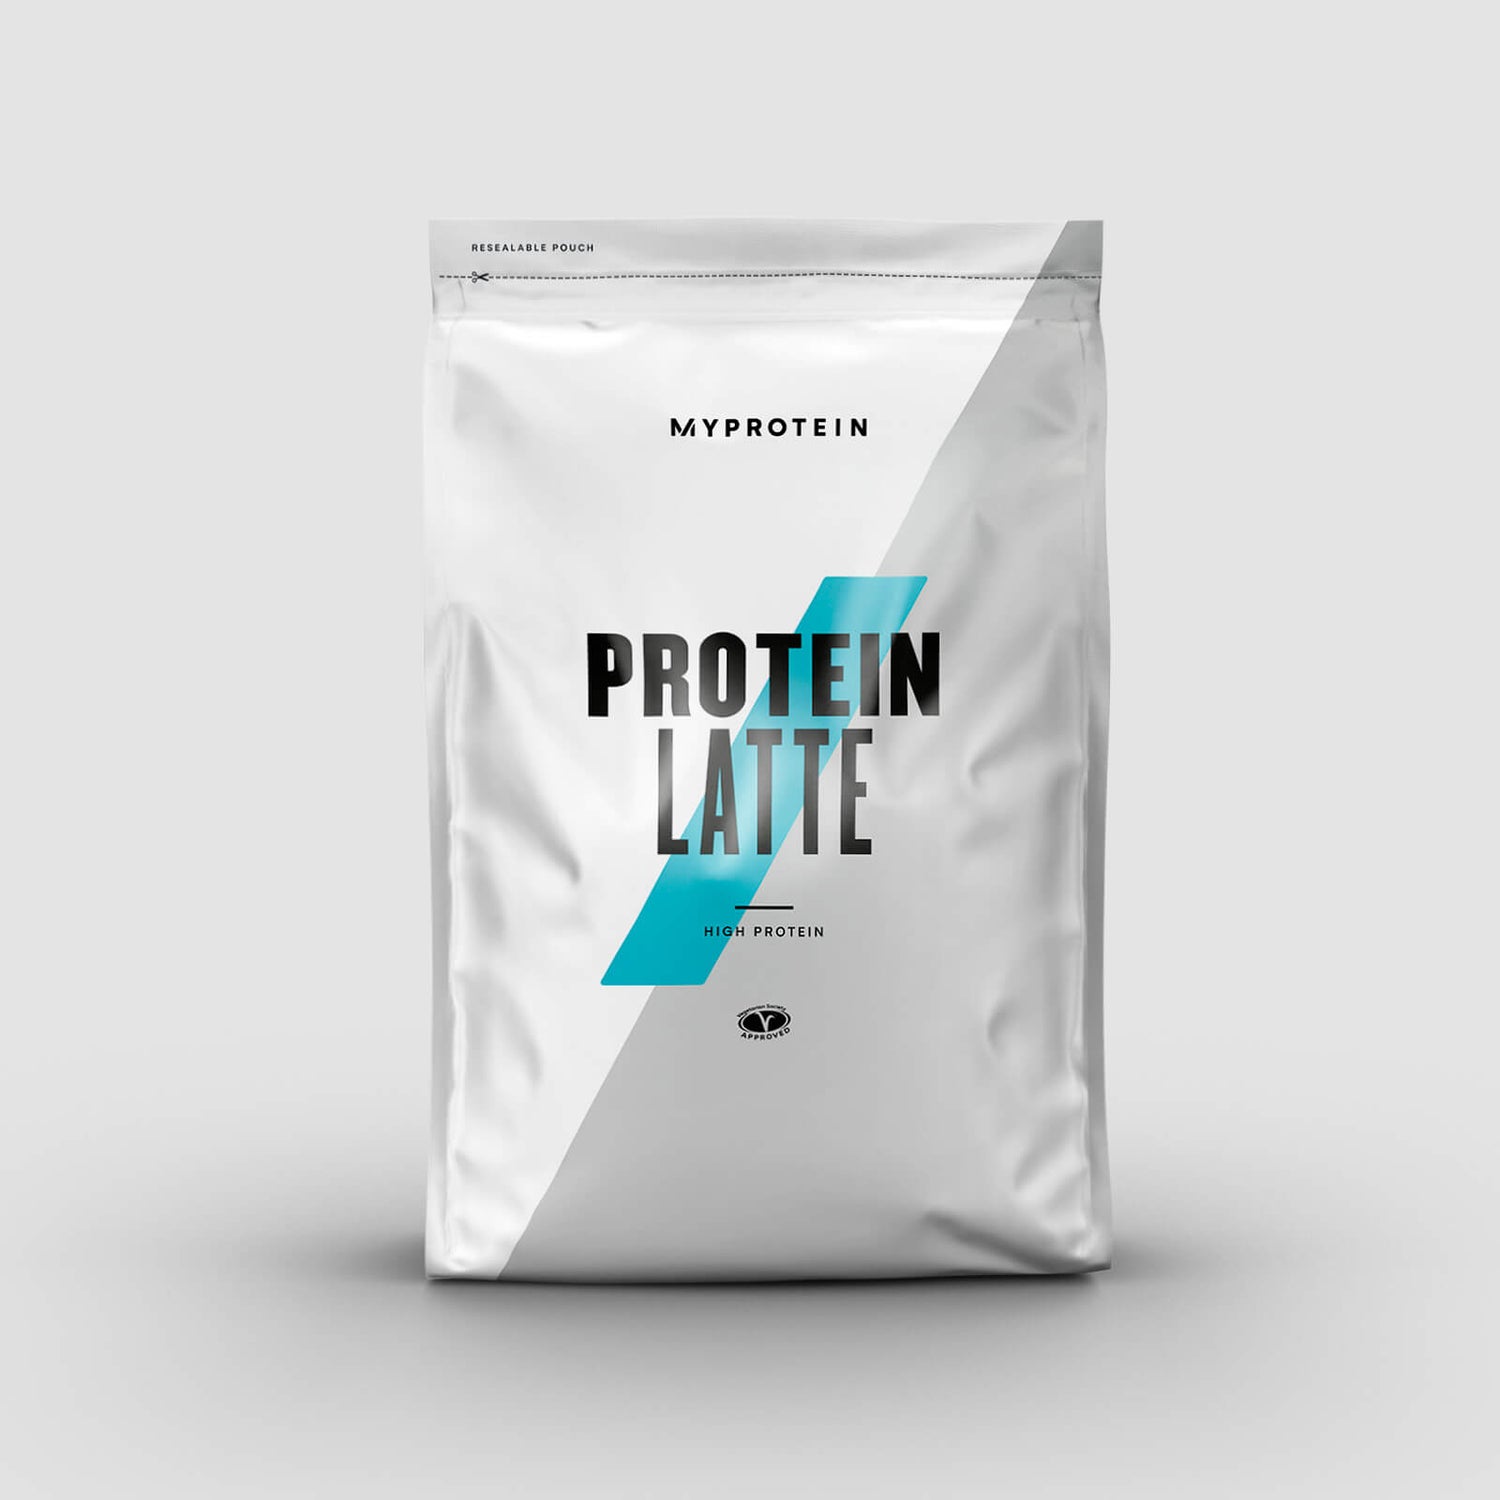 Proteinski Latte - Latte